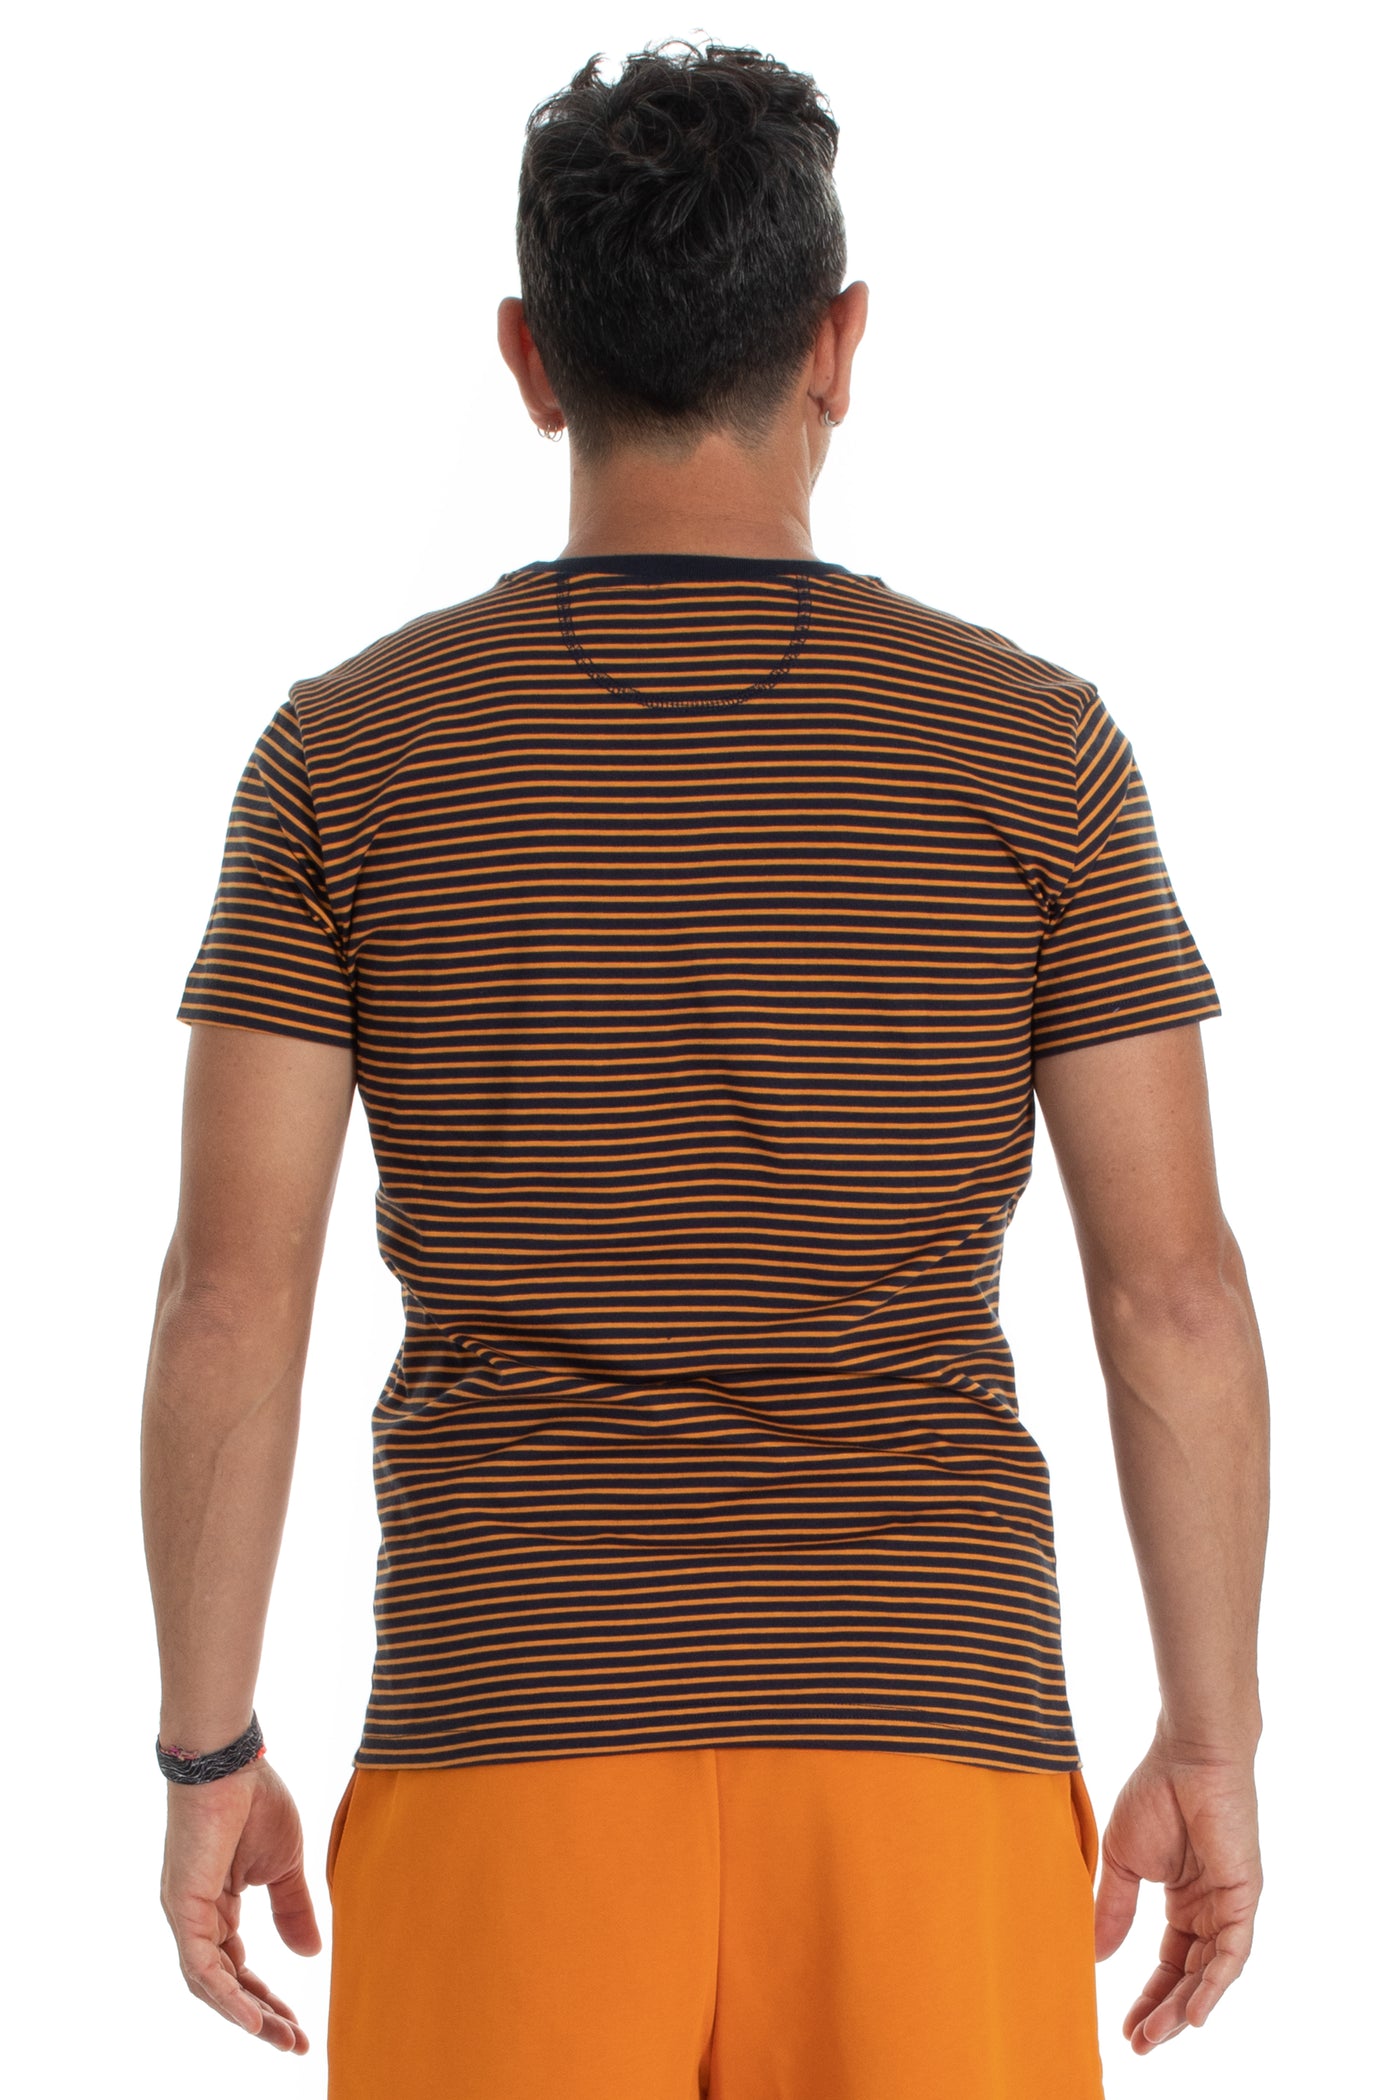 Hill & Dale Striped T-shirt